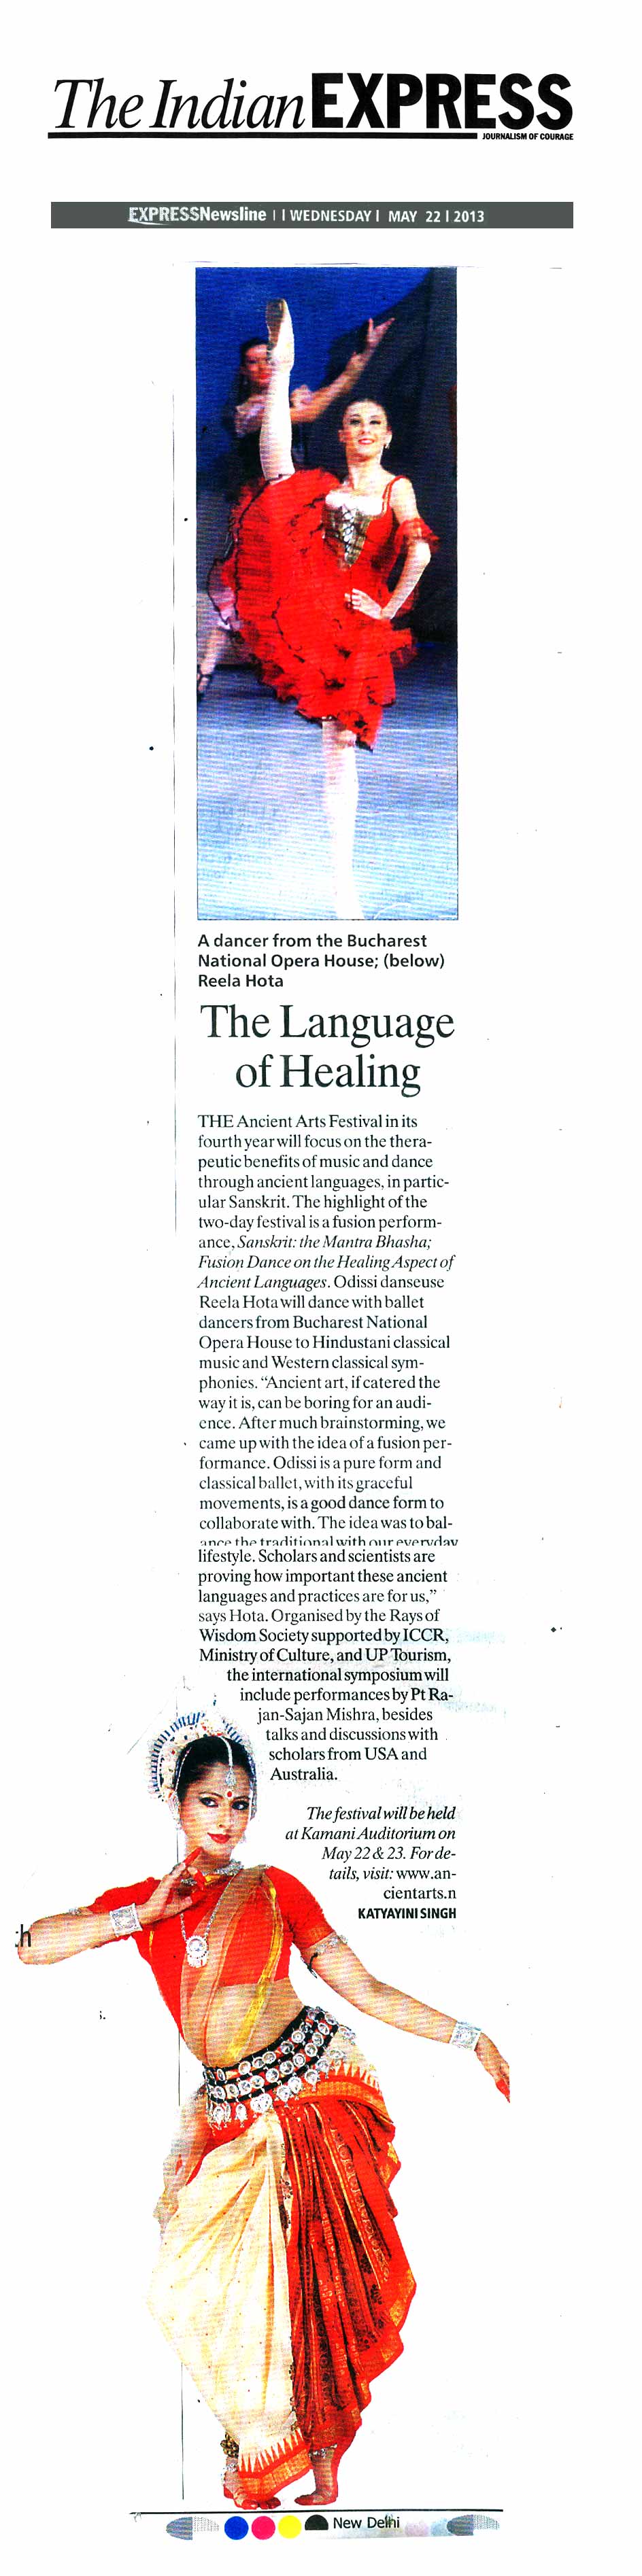 2013 May 22: The Language of Healing - Indian Express.